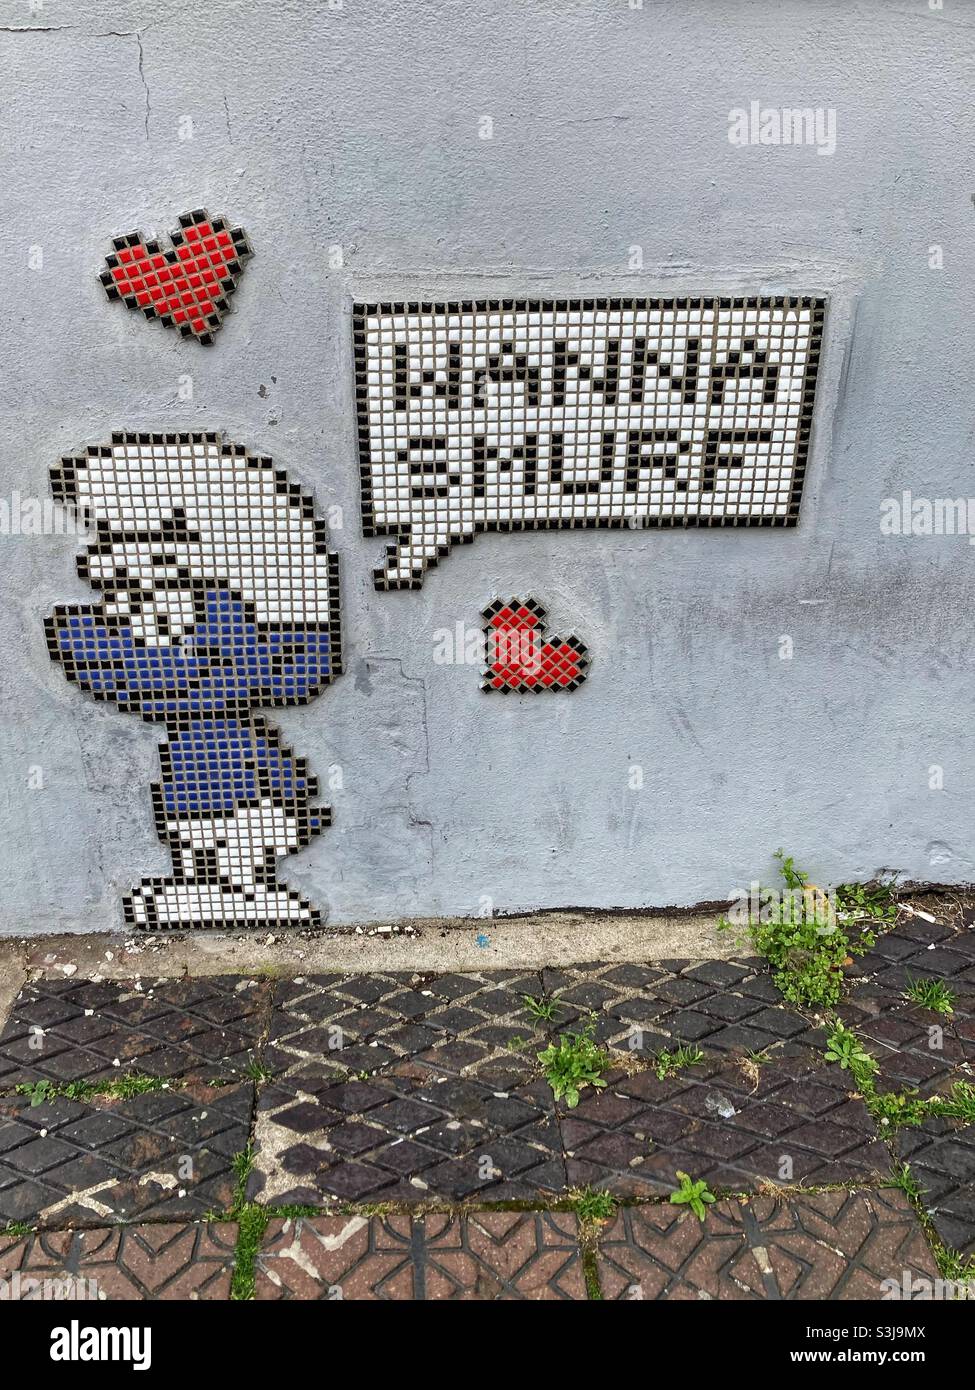 Wanna smurf, mosaic graffiti, North Street, Bristol, England- blue smurf - red hearts - Wall Street art Stock Photo